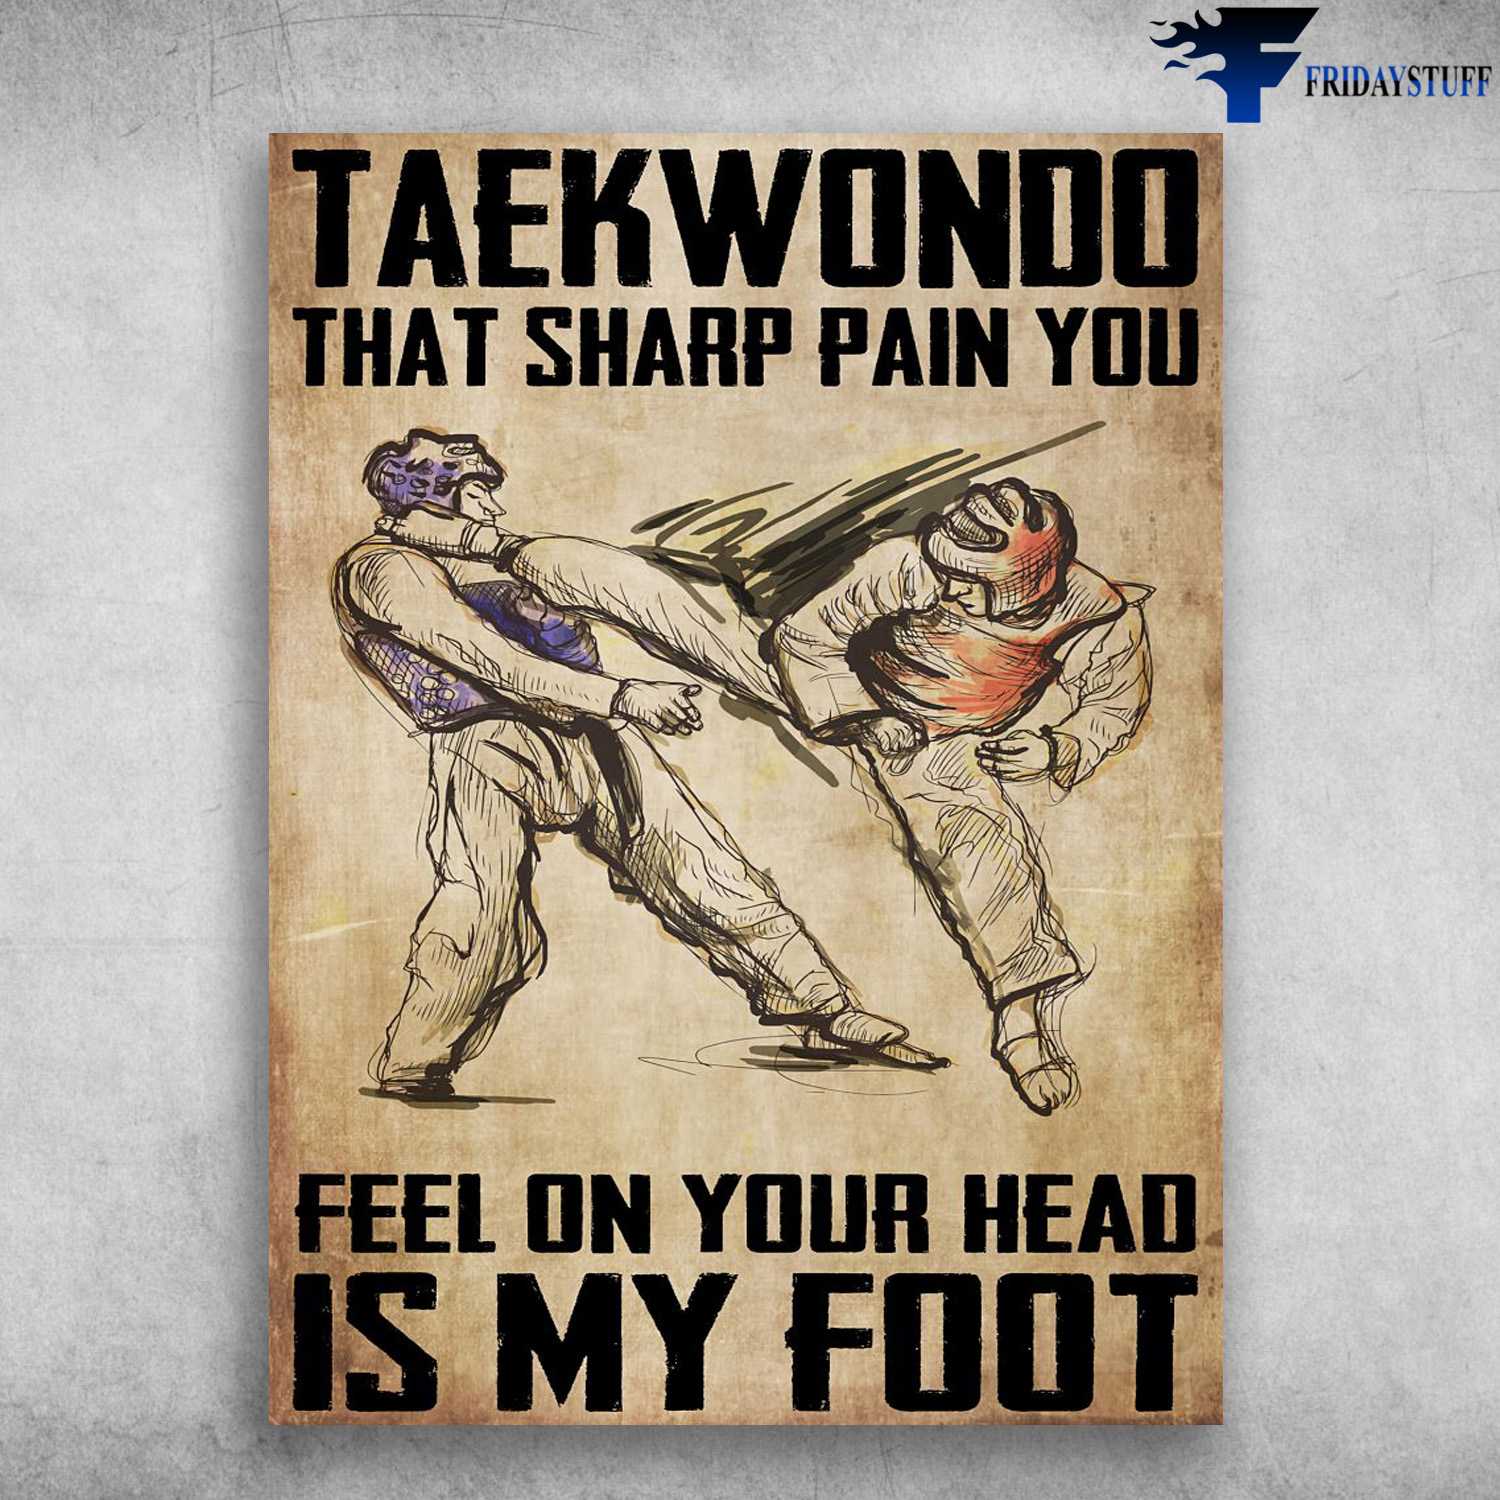 Teakwondo Poster, Teakwondo That Sharp Pain You, Feel On Your Head, Is My Foot